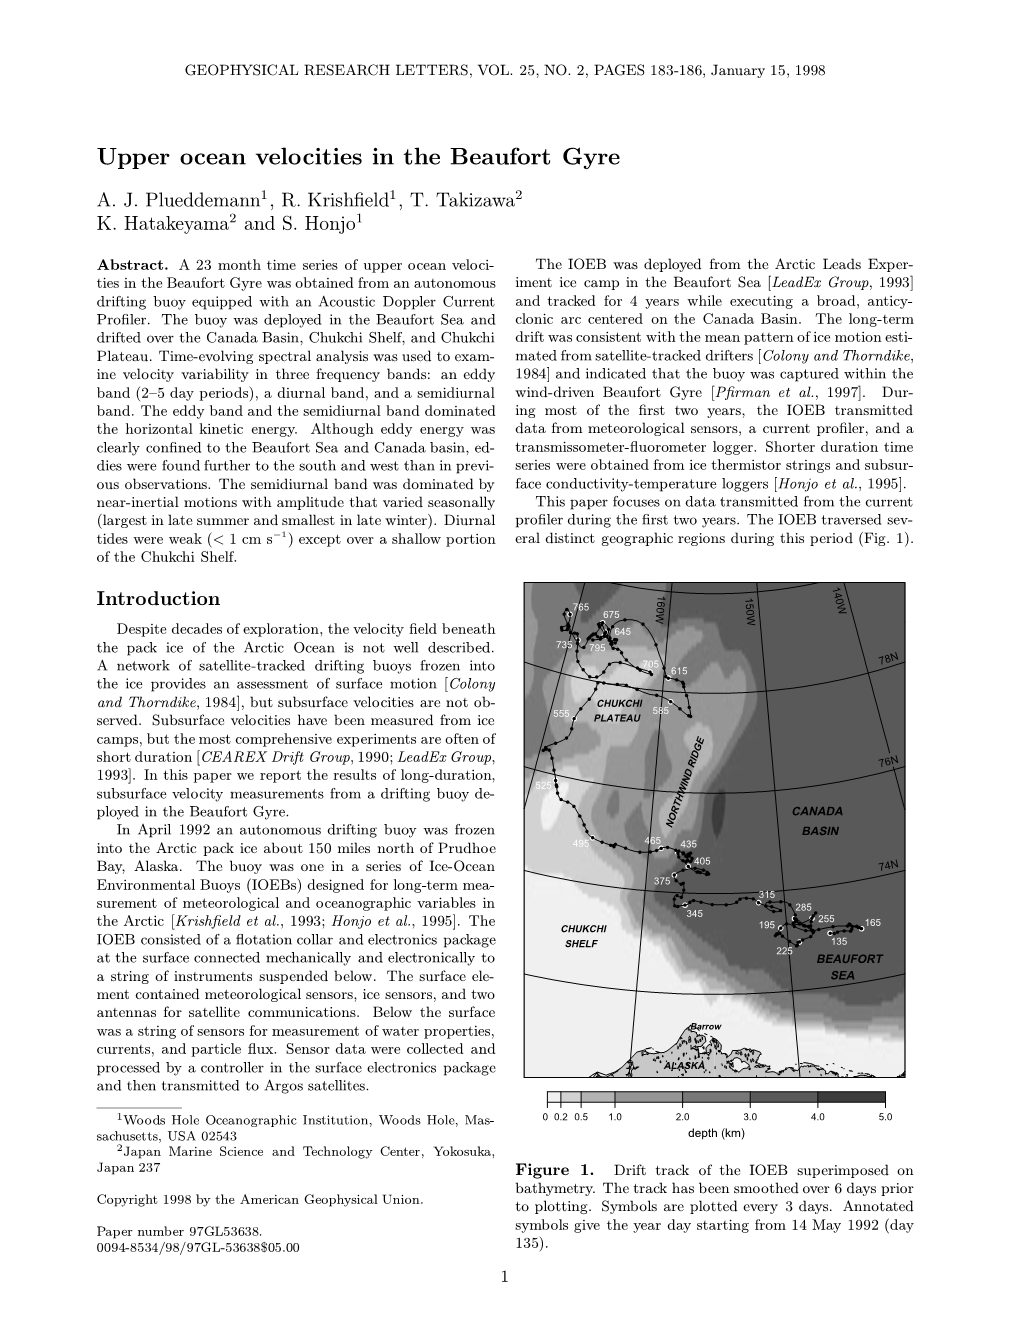 Upper Ocean Velocities in the Beaufort Gyre